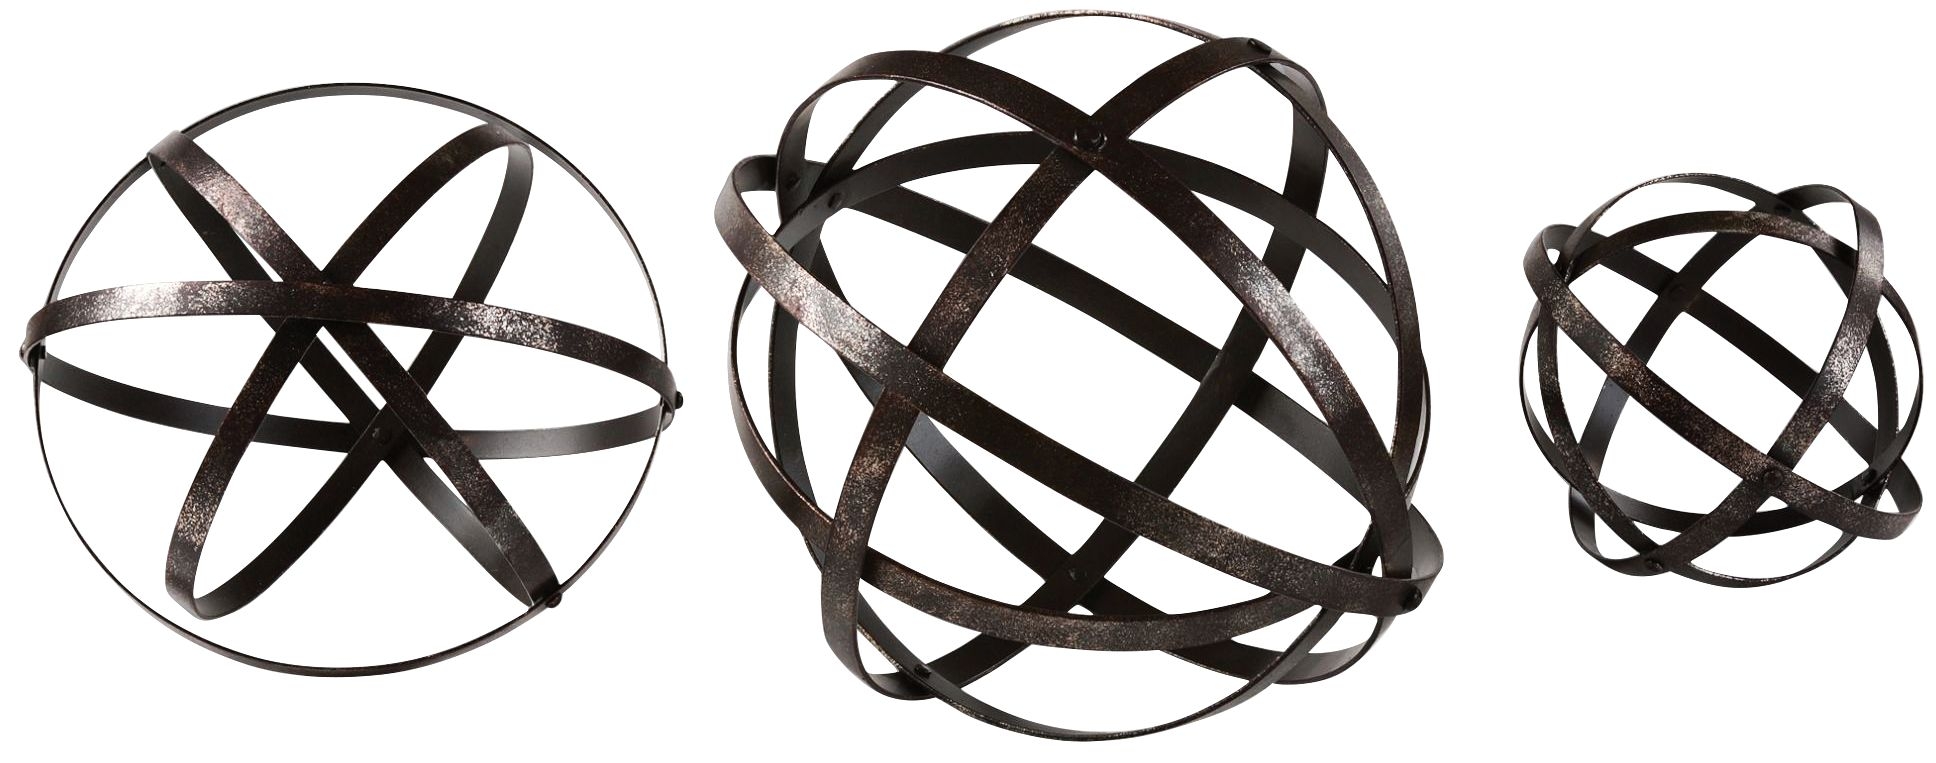 Uttermost Stetson 3-Piece Sphere Set - Image 0